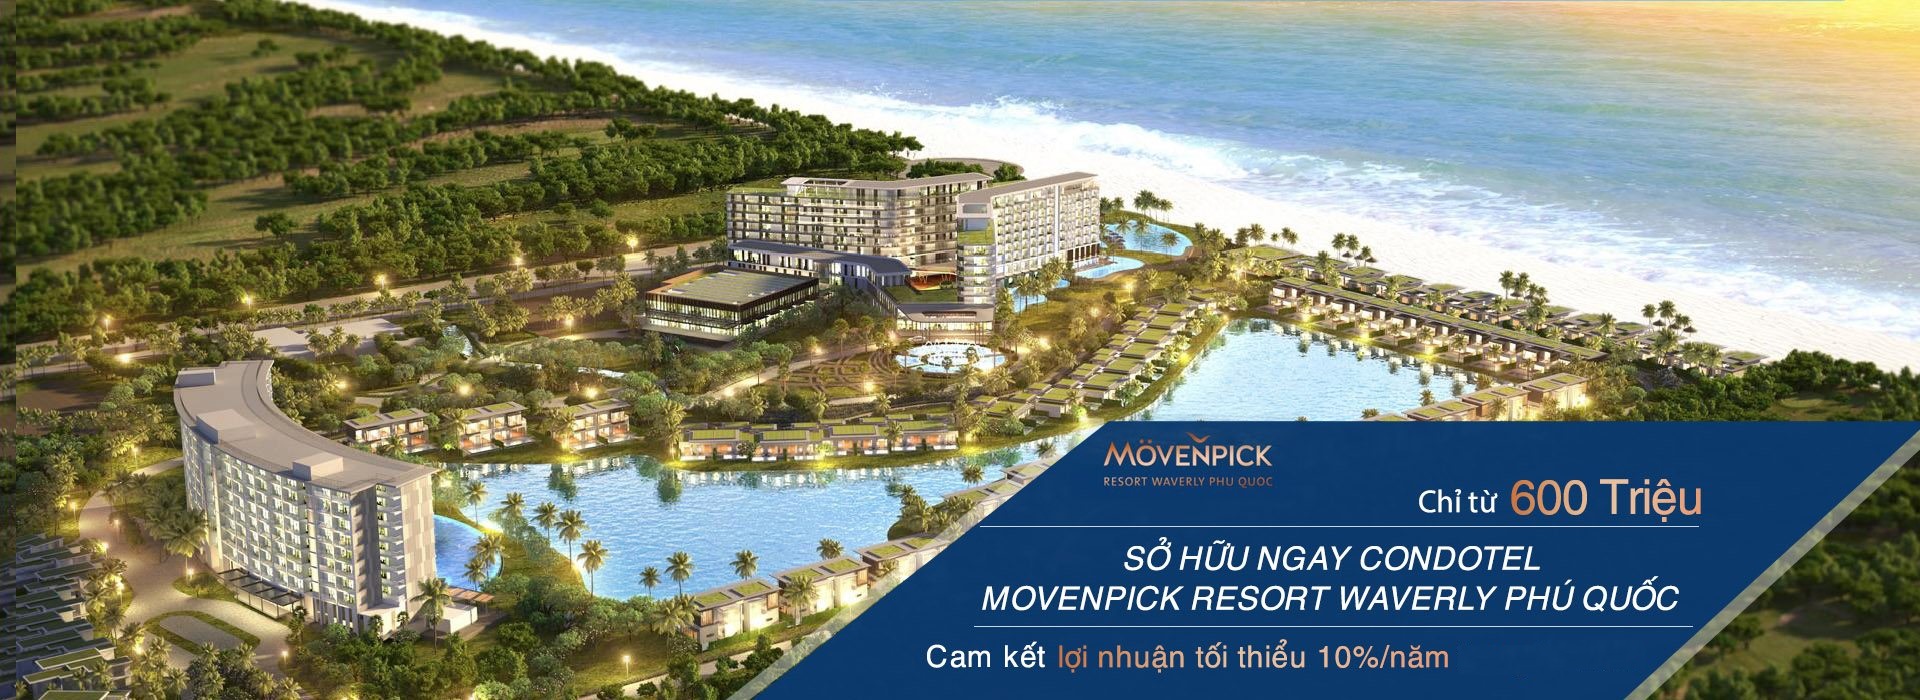 Movenpick Resort Waverly Phú Quốc 1